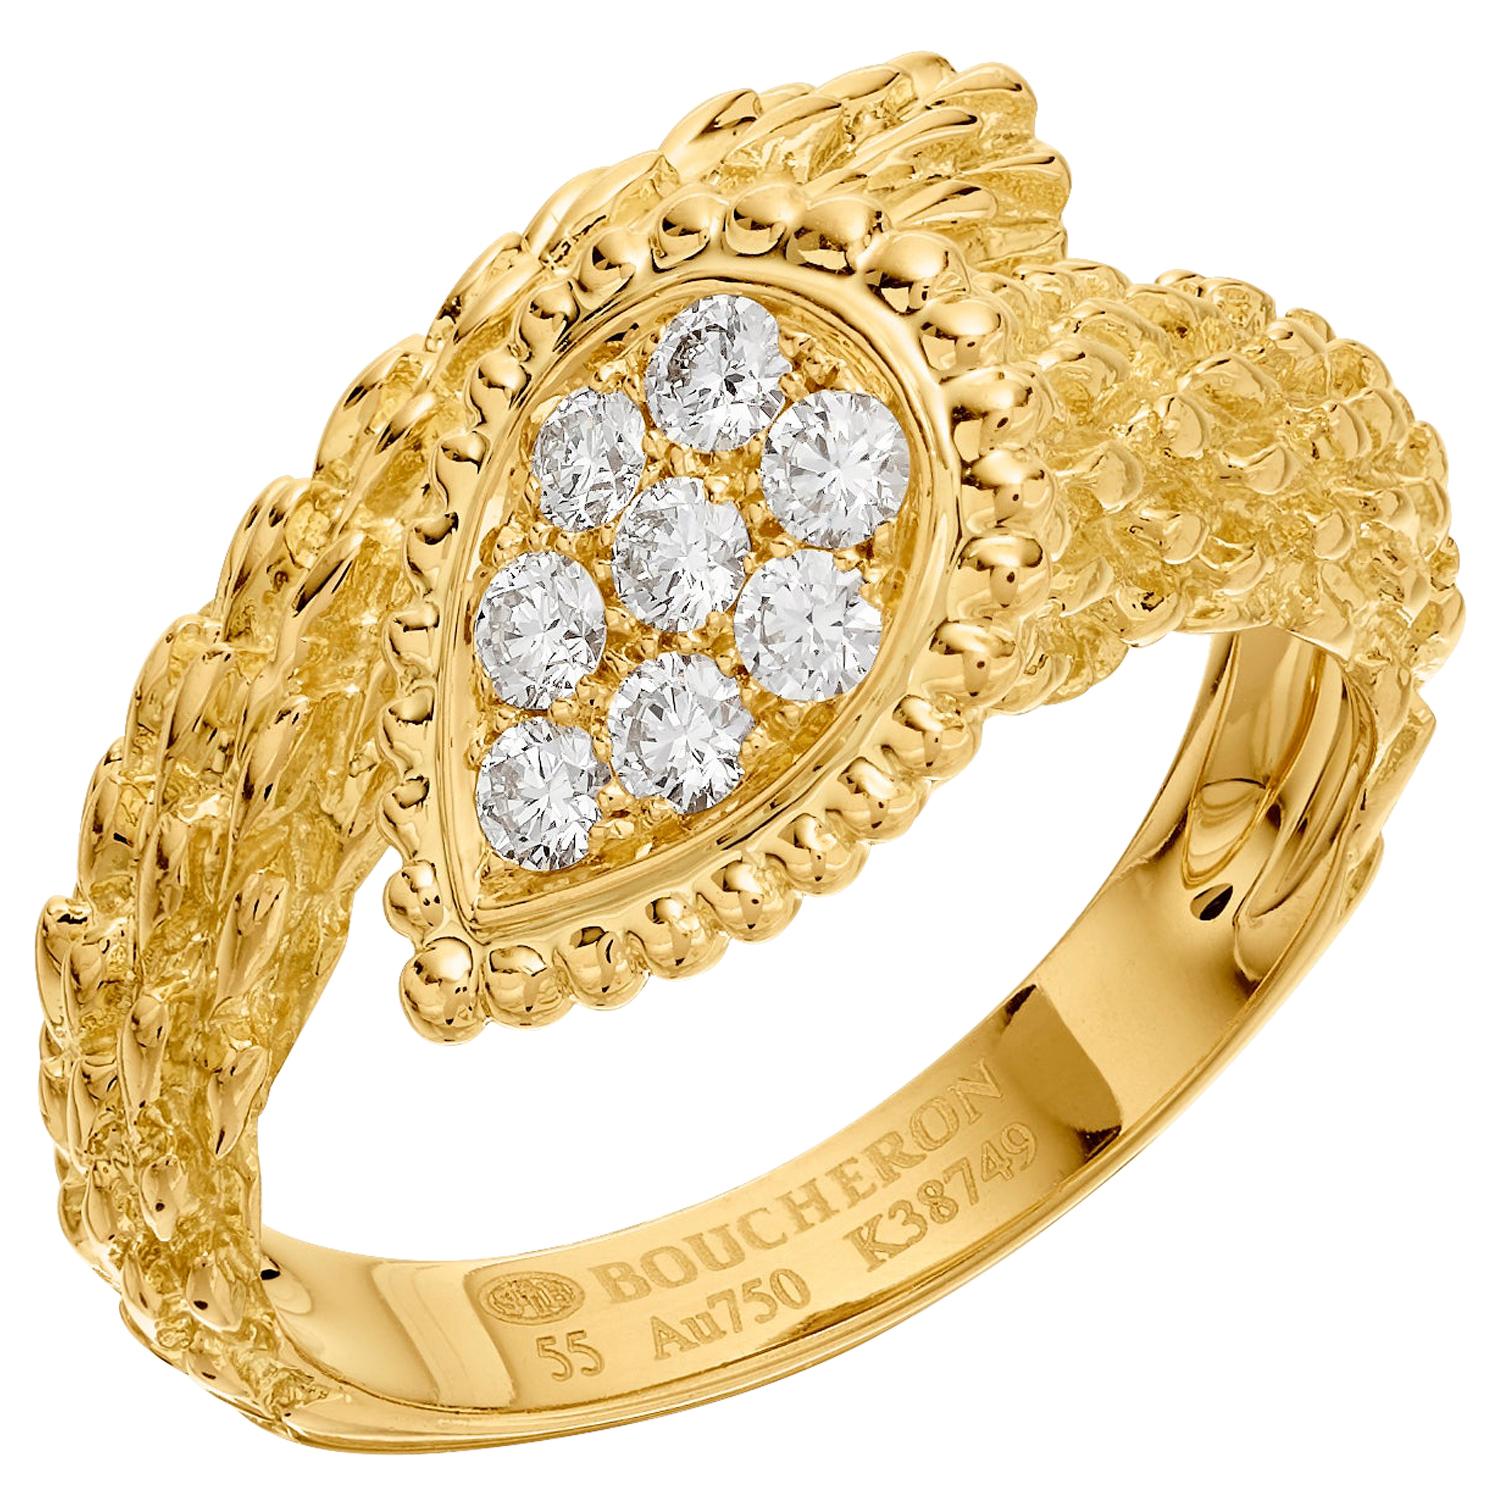 Boucheron Serpent Boheme Ring in 18 Karat Yellow Gold with Diamonds